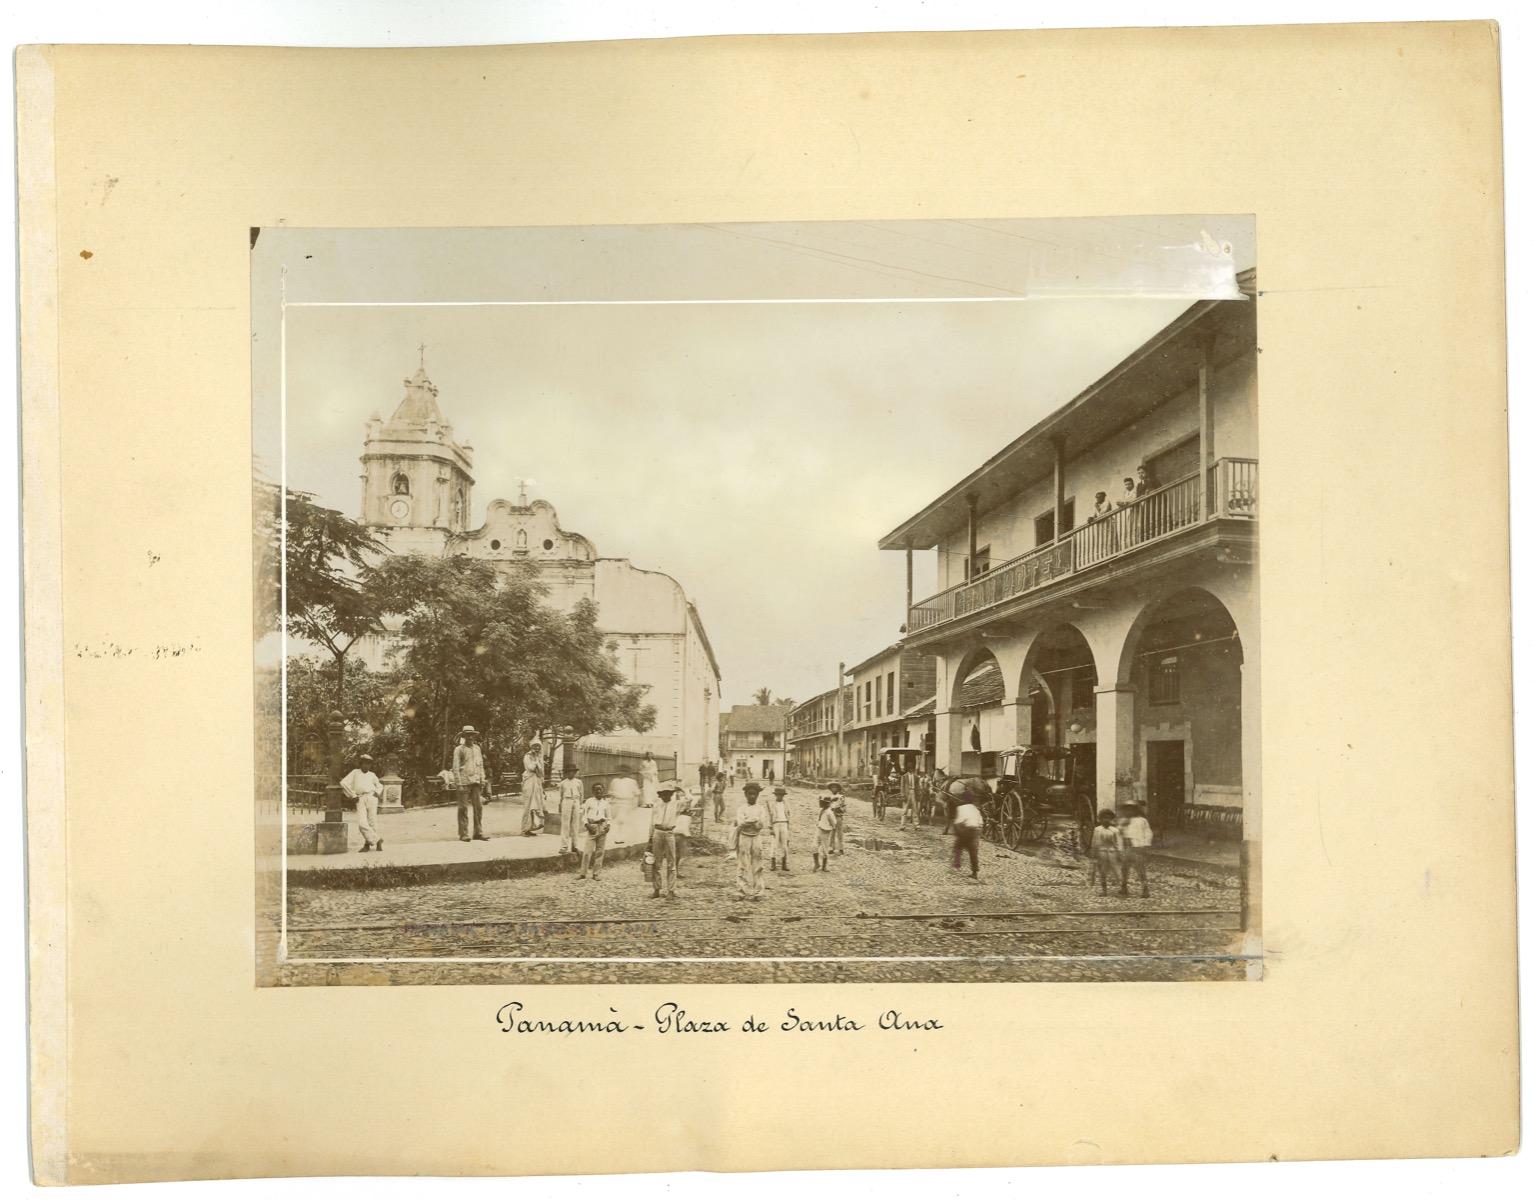 Unknown Figurative Photograph - Ancient Views of Panama City - Vintage Photos - 1880s